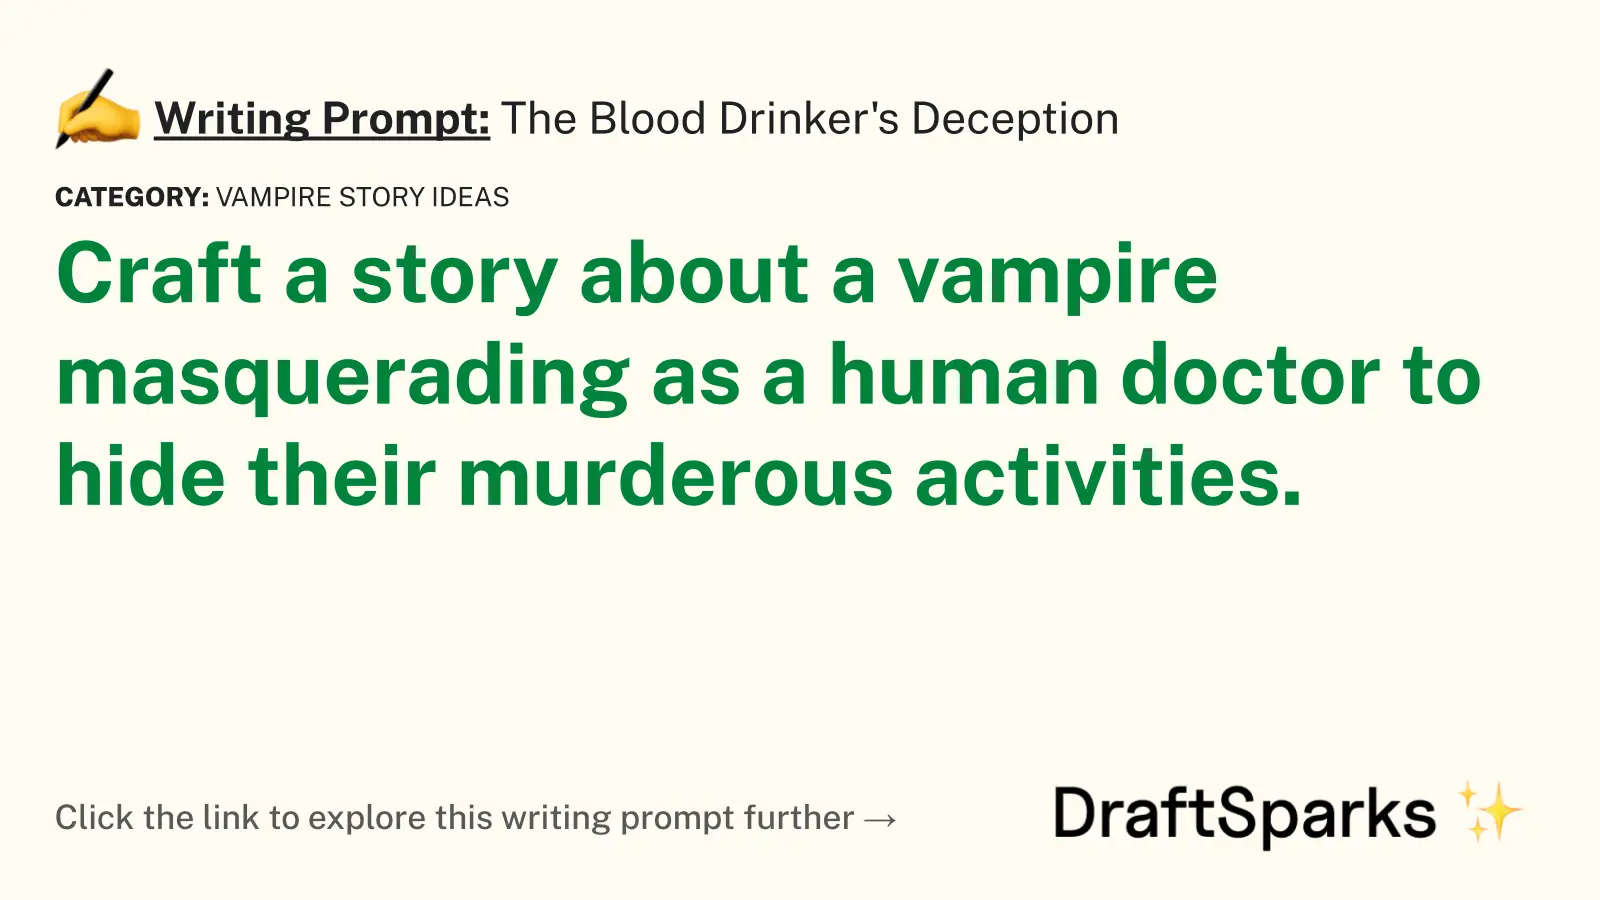 The Blood Drinker’s Deception